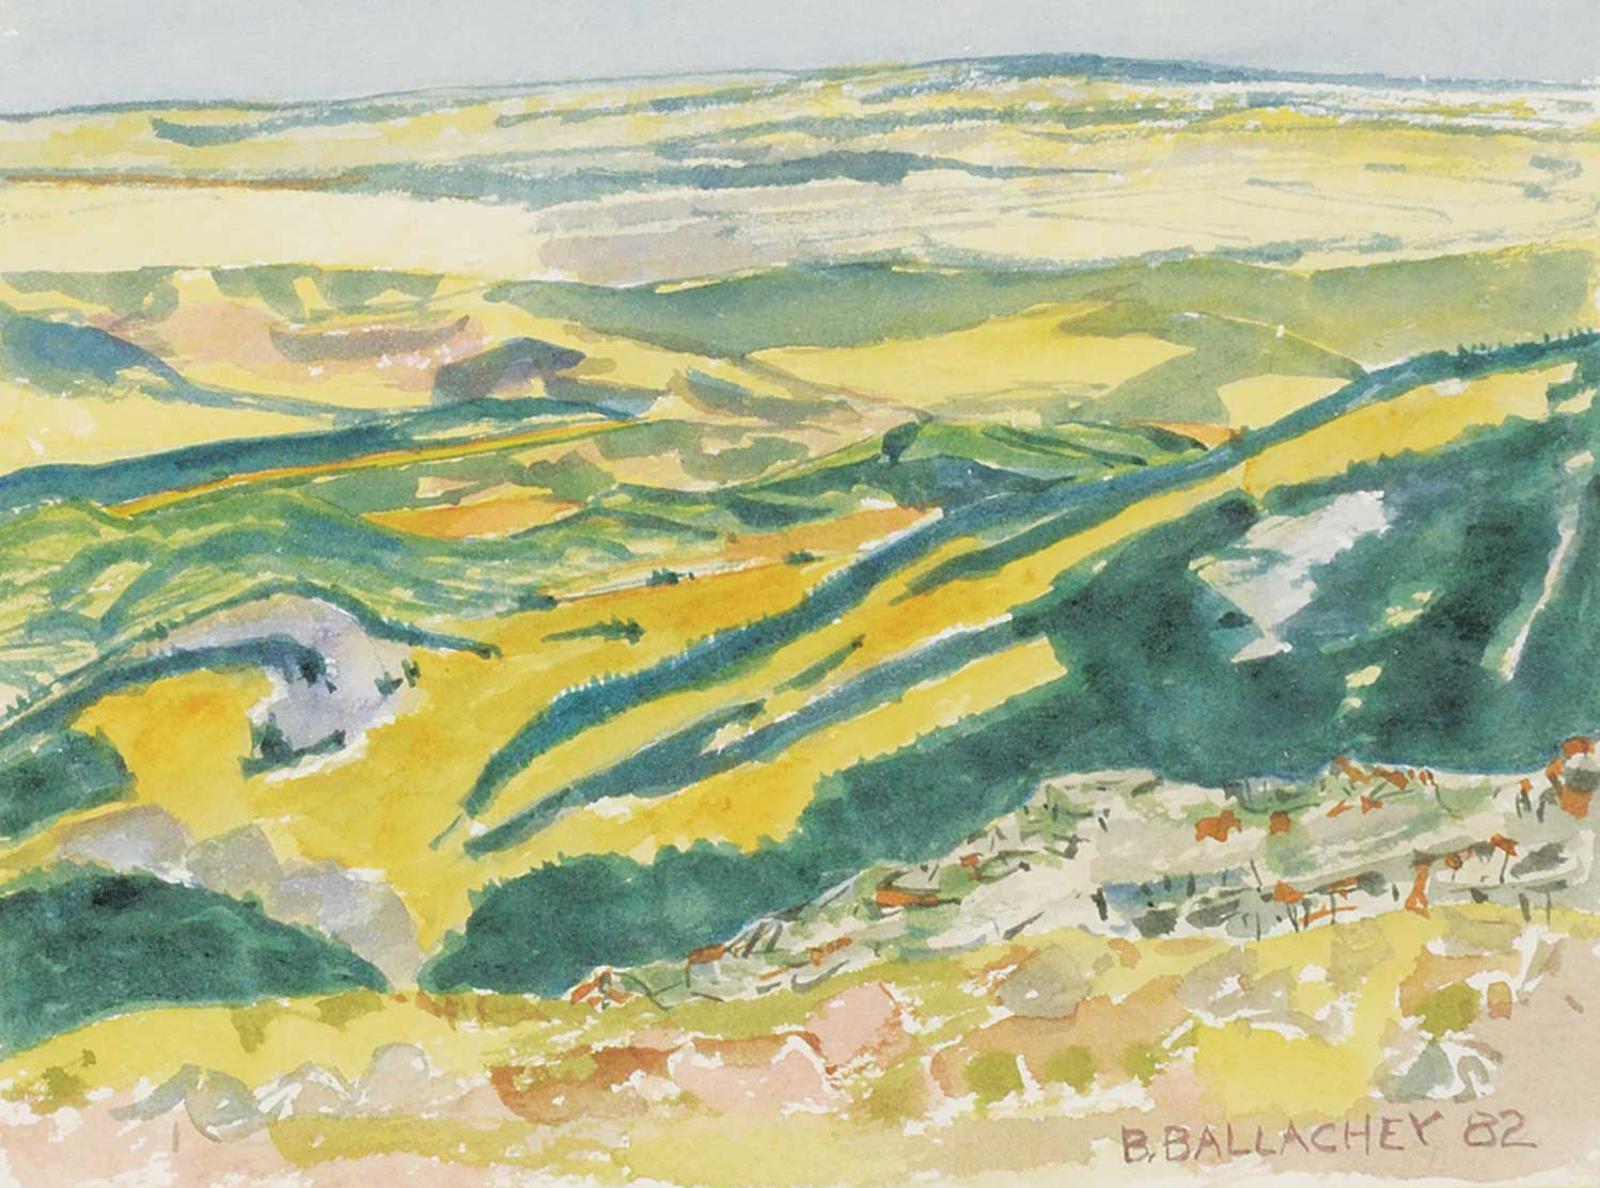 Barbara Ballachey (1949) - Untitled - Landscape